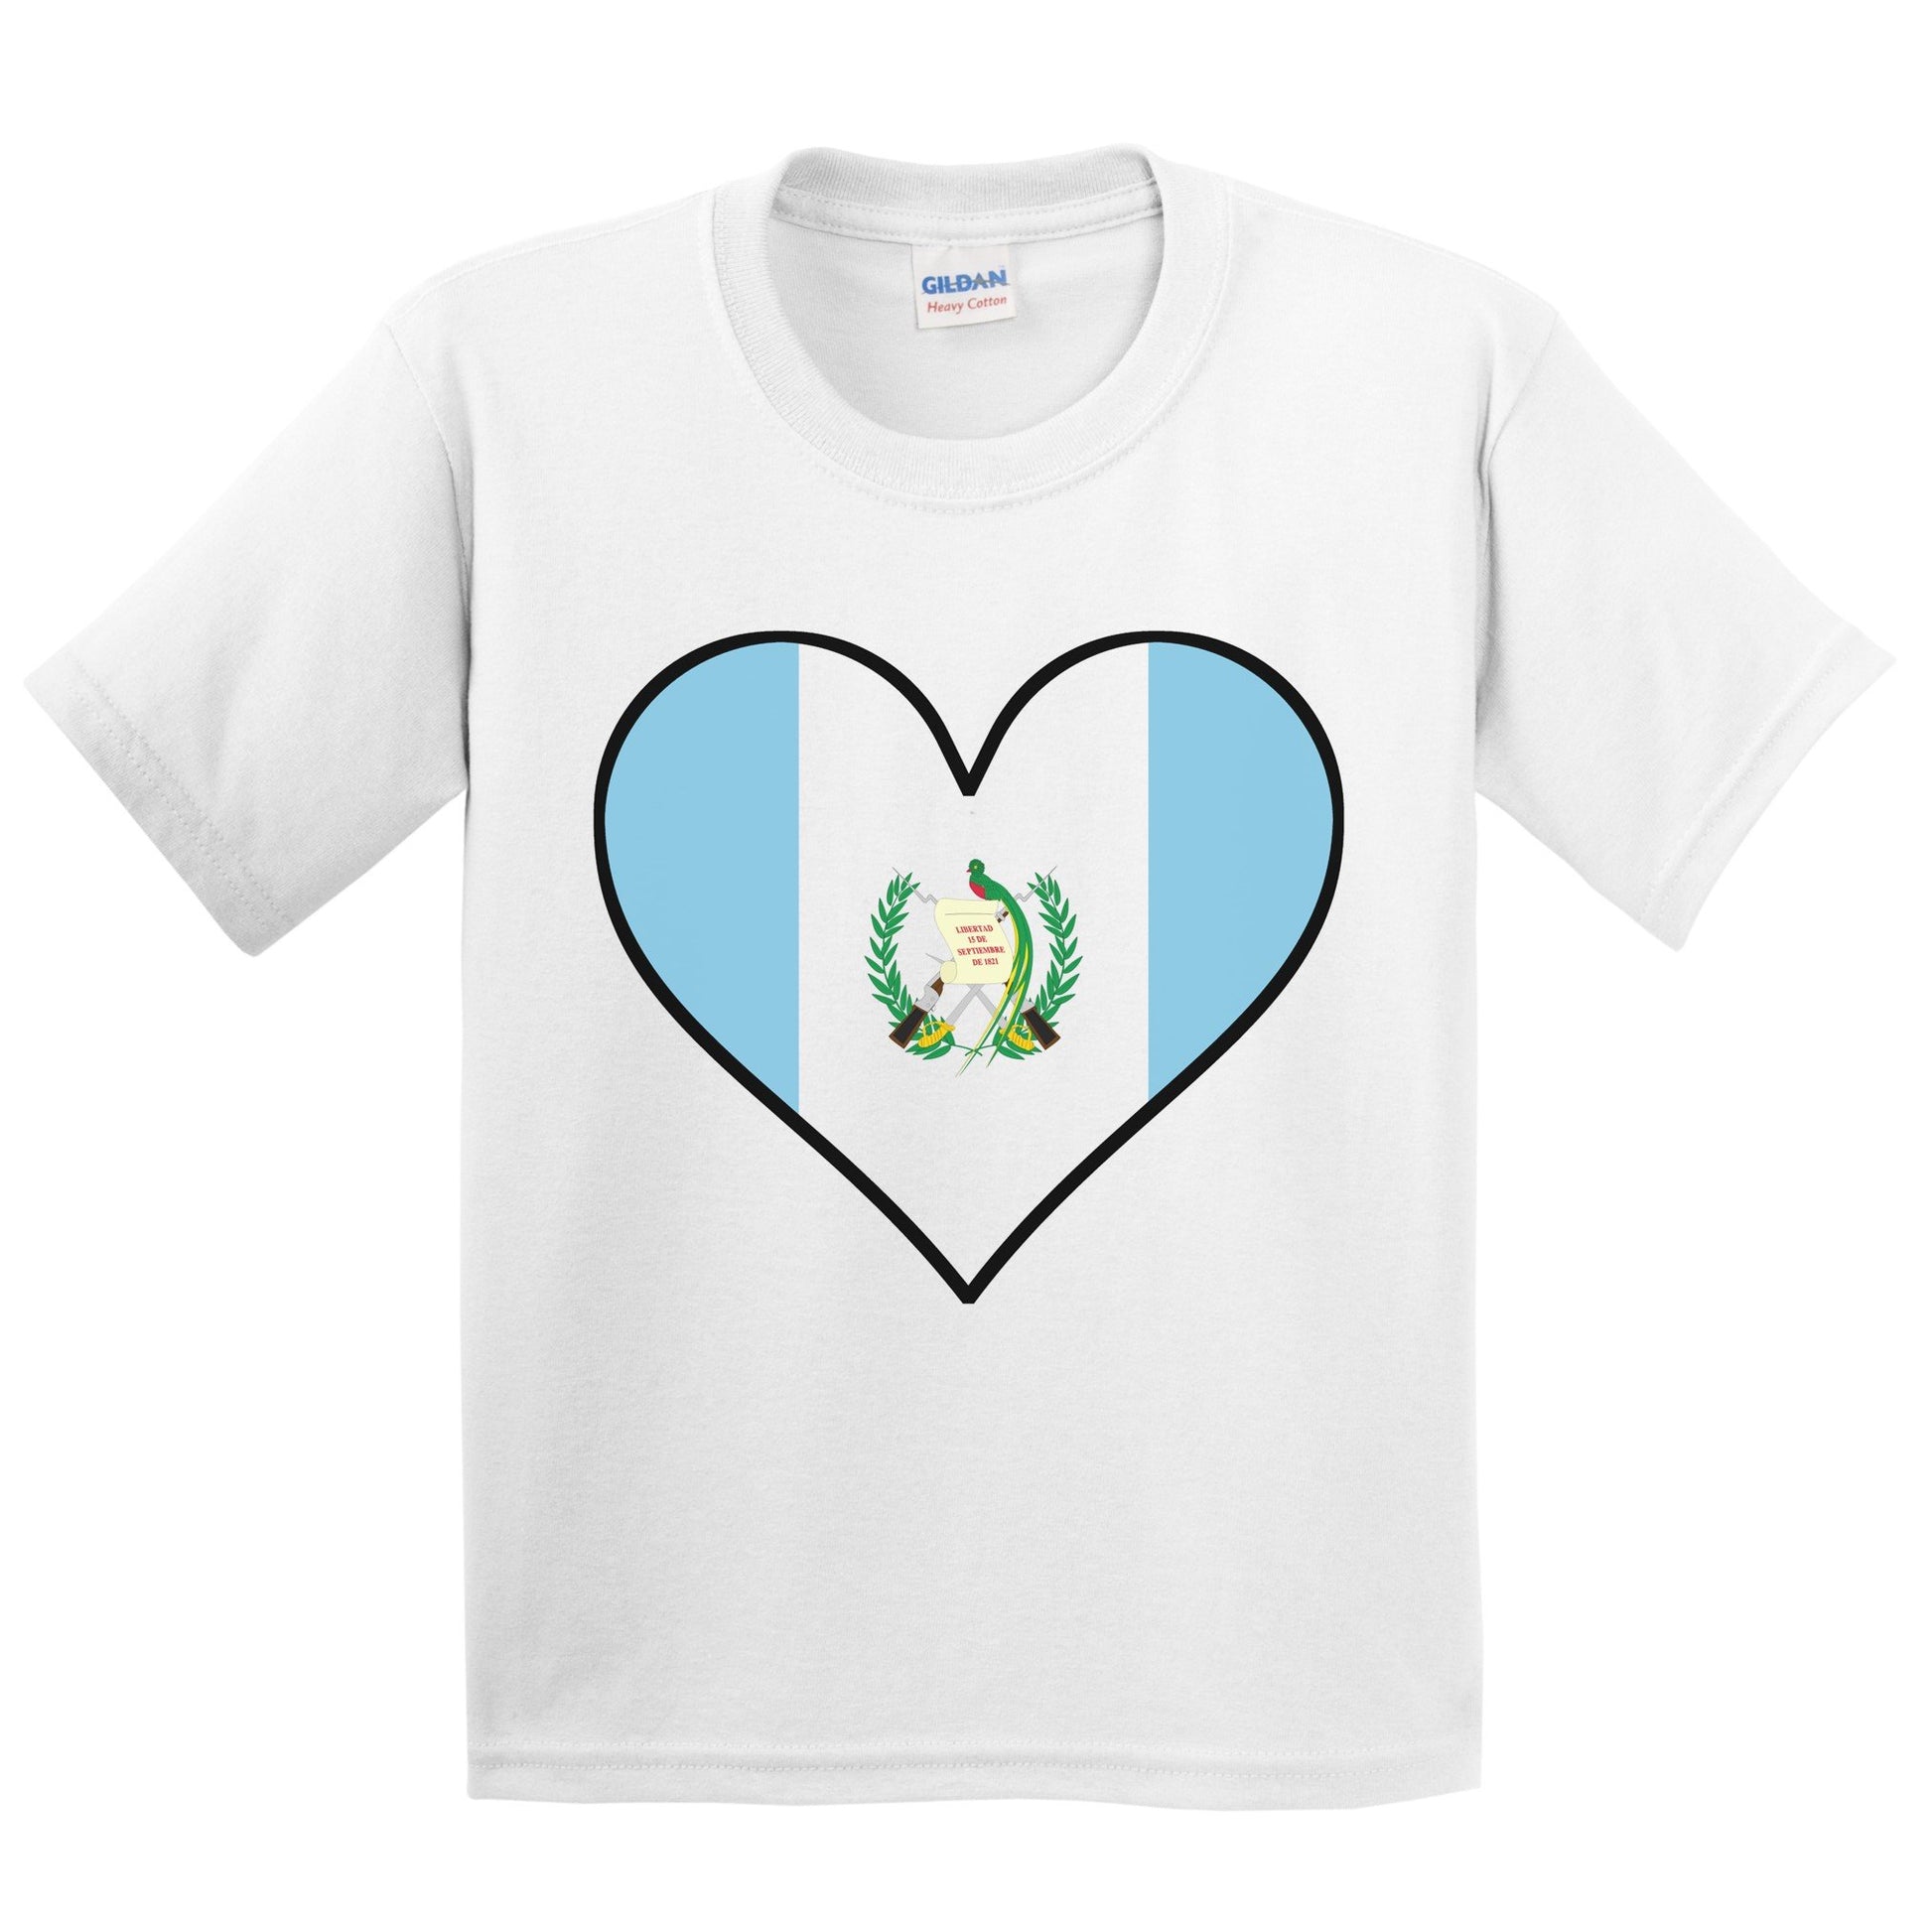 Guatemalan Flag T-Shirt - Cute Guatemalan Flag Heart - Guatemala Kids Youth Shirt